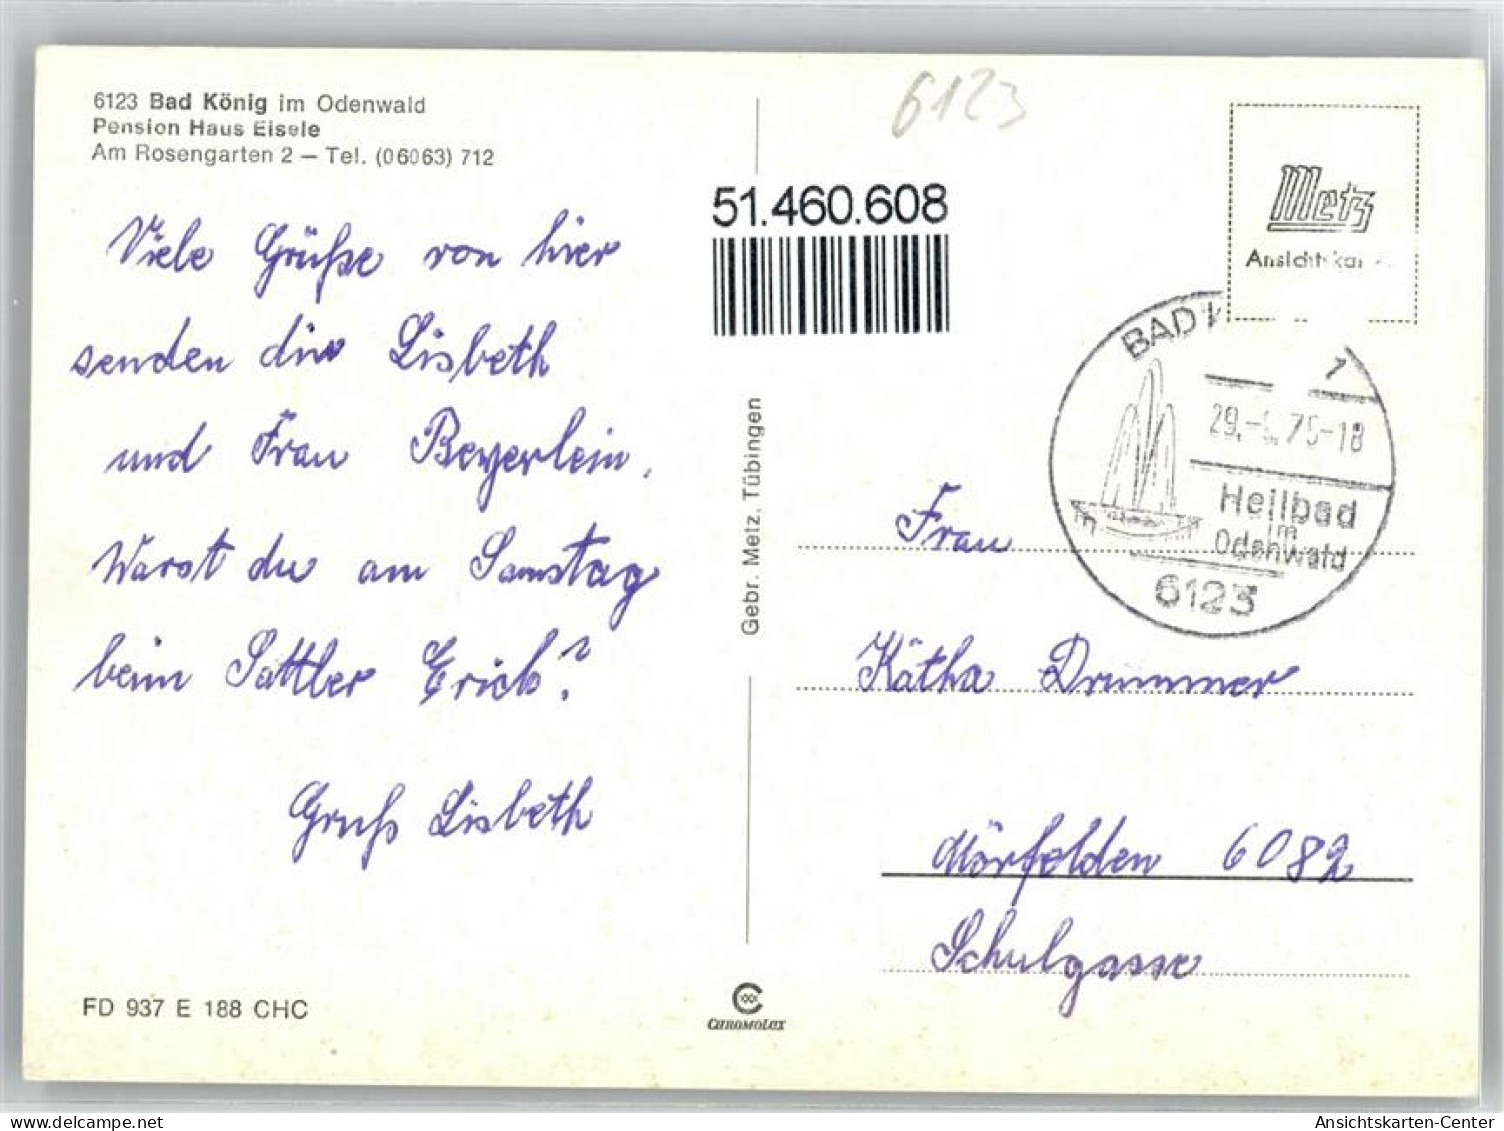 51460608 - Bad Koenig - Bad König